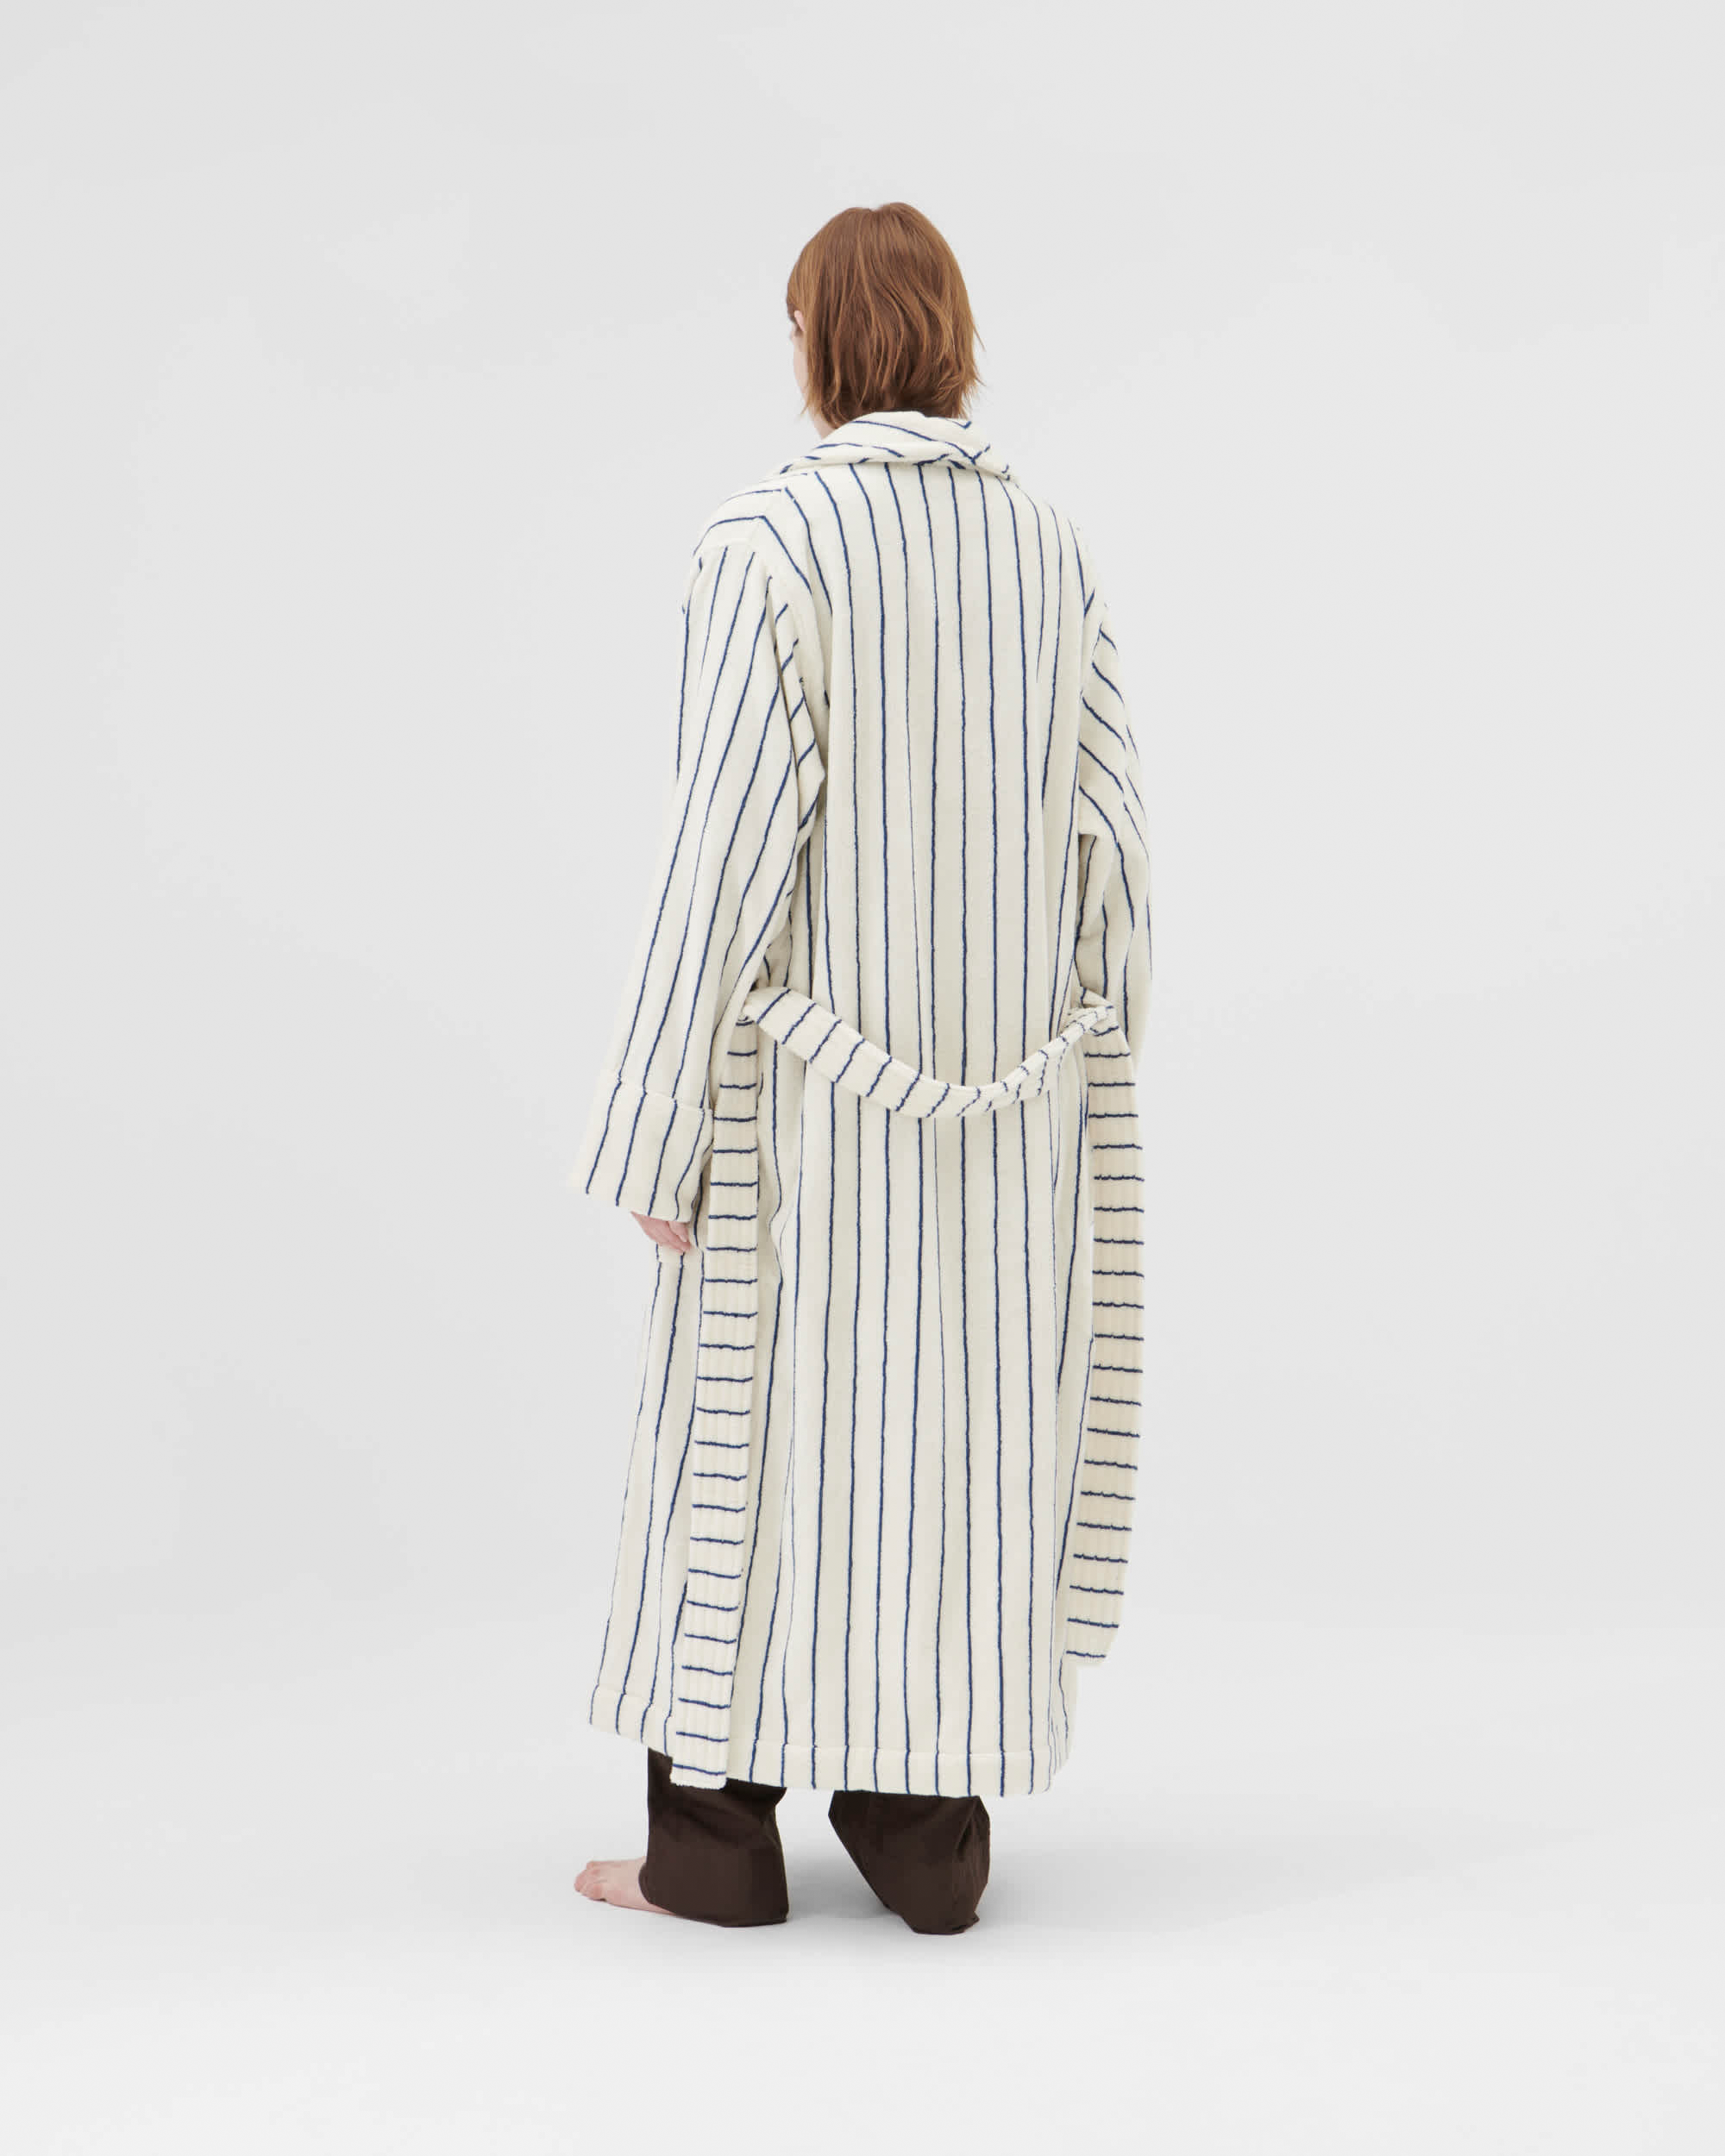 Classic Bathrobes (Striped) - Lima / Brown Stripes